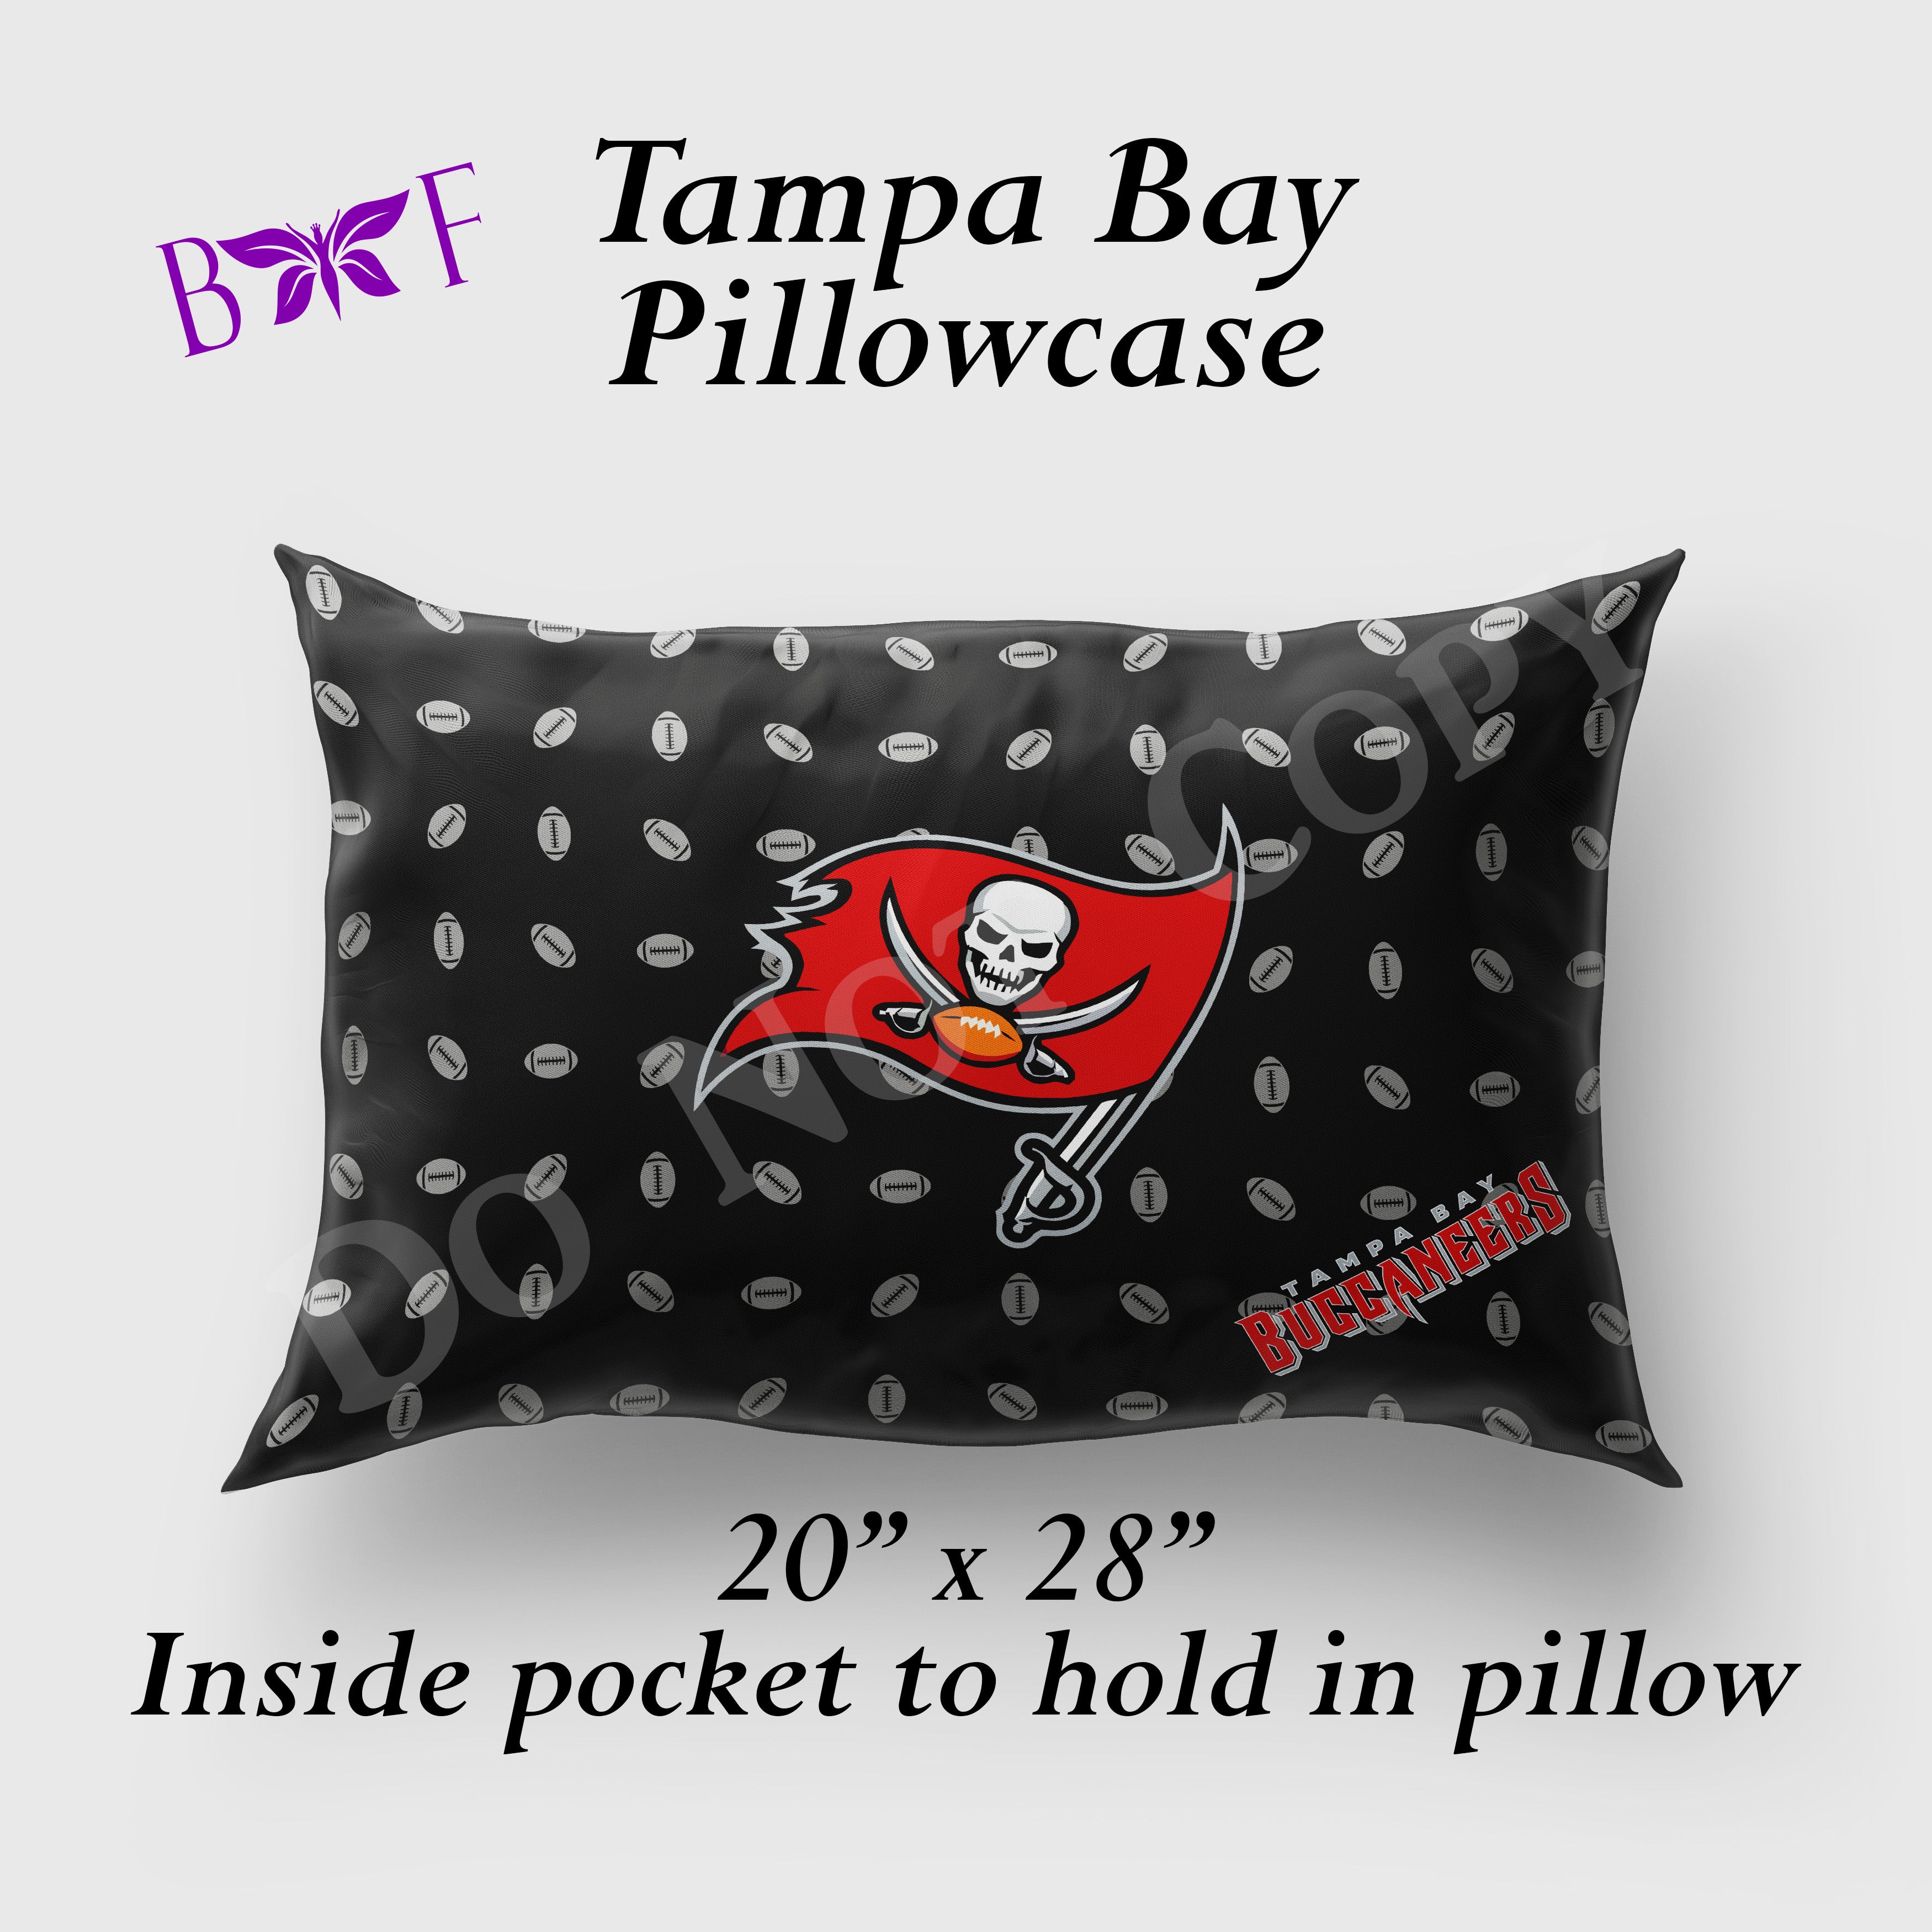 Tampa Bay Pillowcase